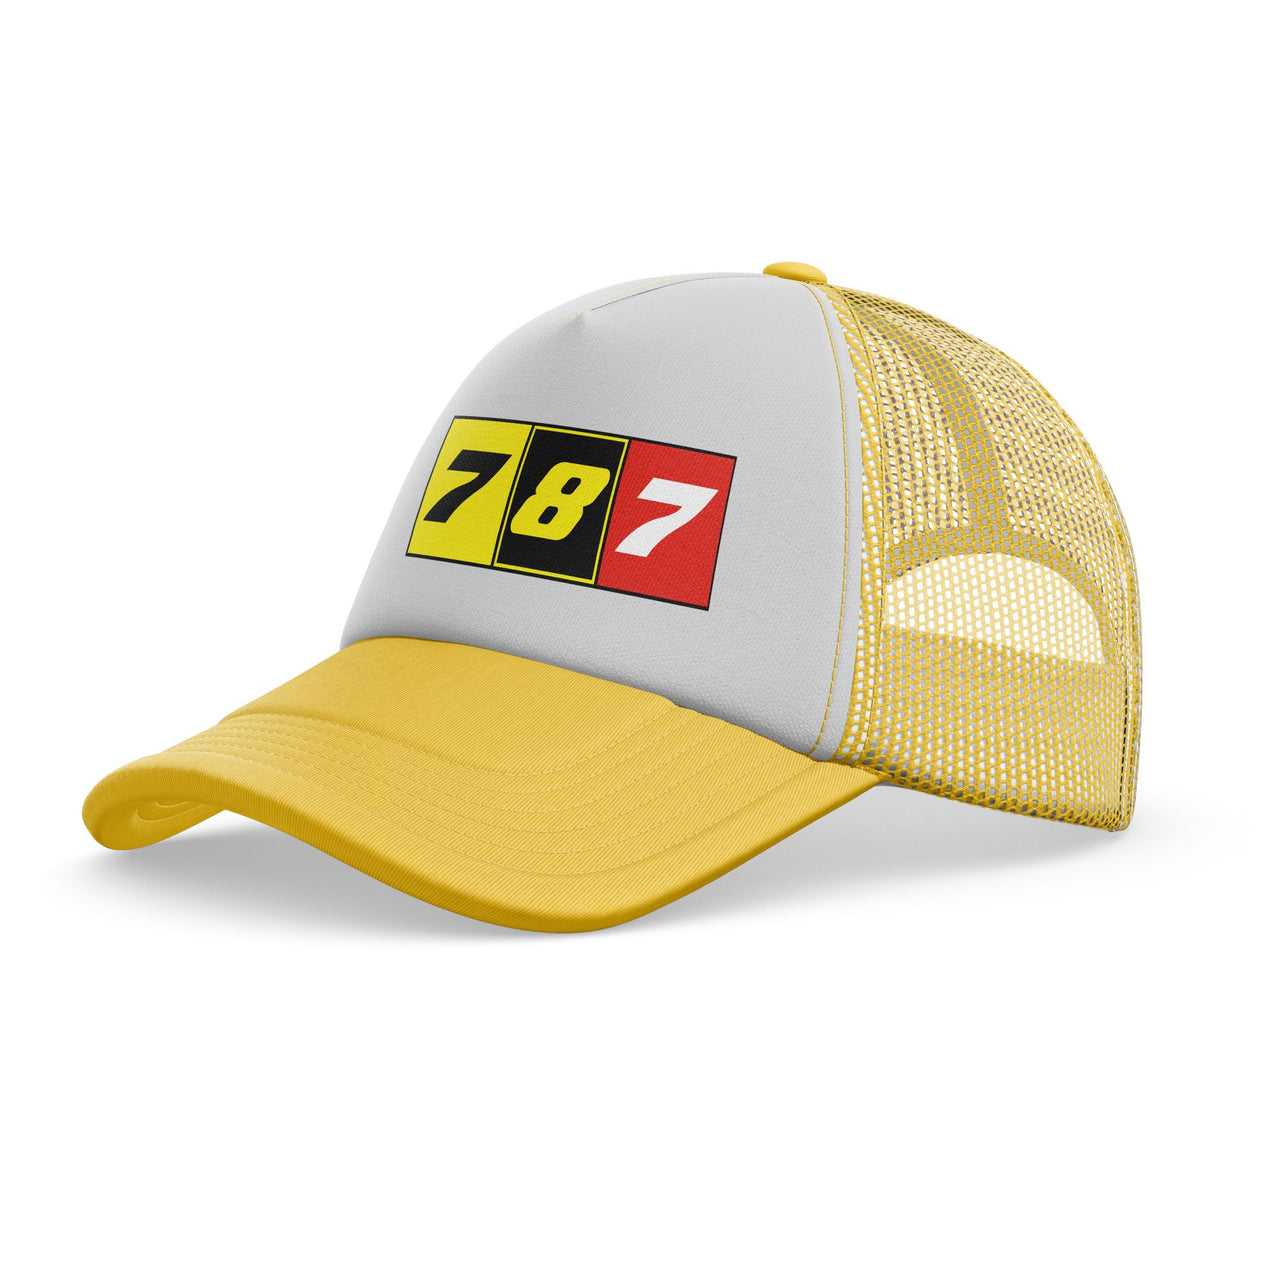 Flat Colourful 787 Designed Trucker Caps & Hats